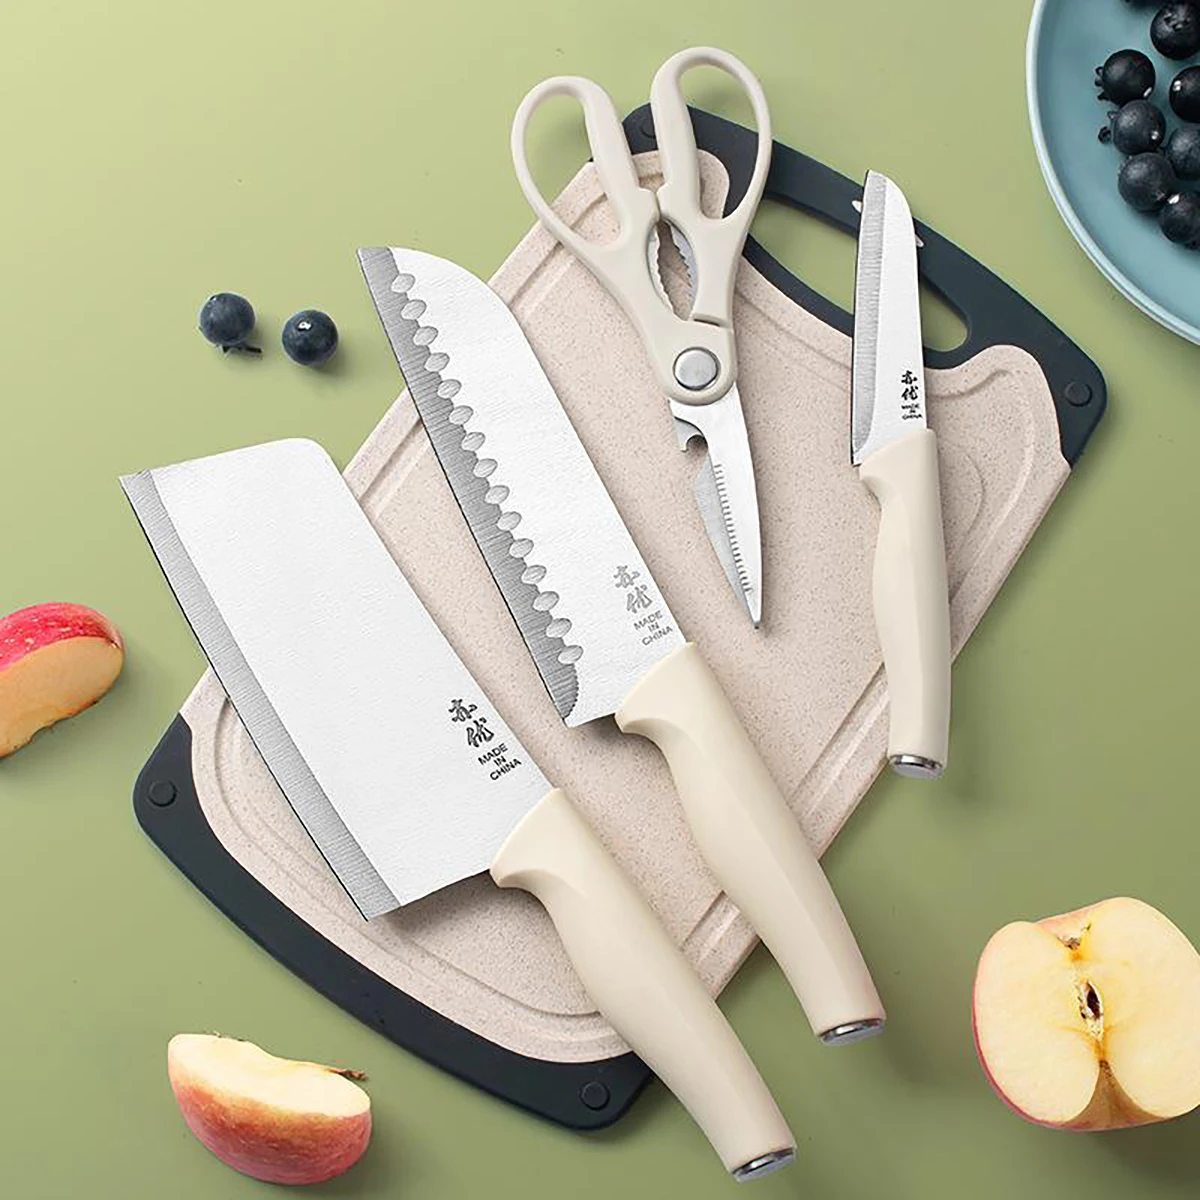 https://ae01.alicdn.com/kf/S3f35d6e9e45a4052922b90915db6d2c9O/5pcs-Kitchen-Knife-Set-Cutting-Knife-Fruit-Knife-Peeling-Knife-Multi-Purpose-Scissors-Set-With-Storage.jpg